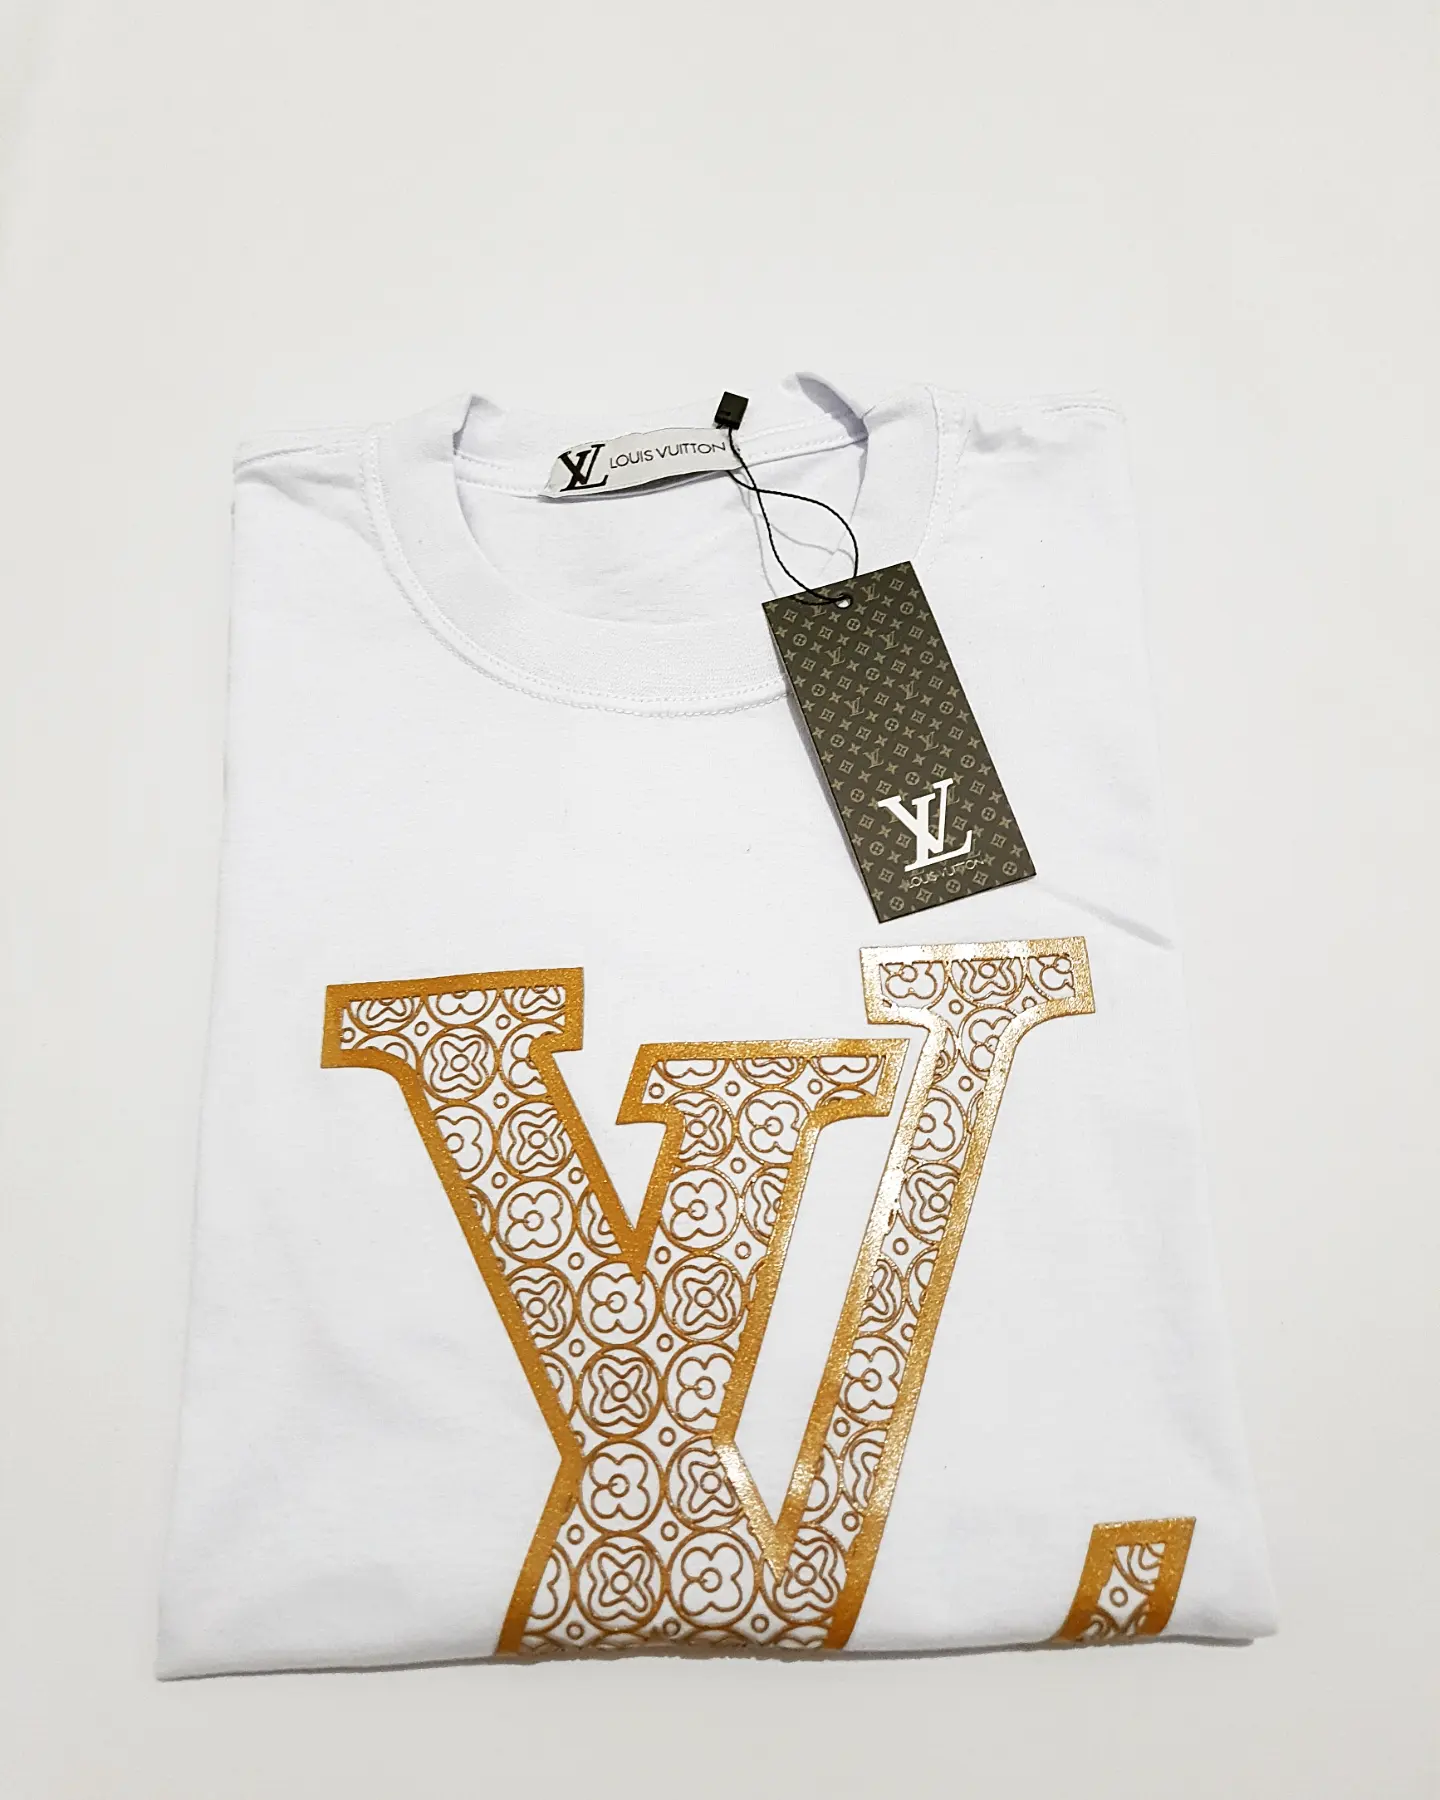 Camiseta Masculina Louis Vuitton Manga Curta Gola Redonda Com Logo